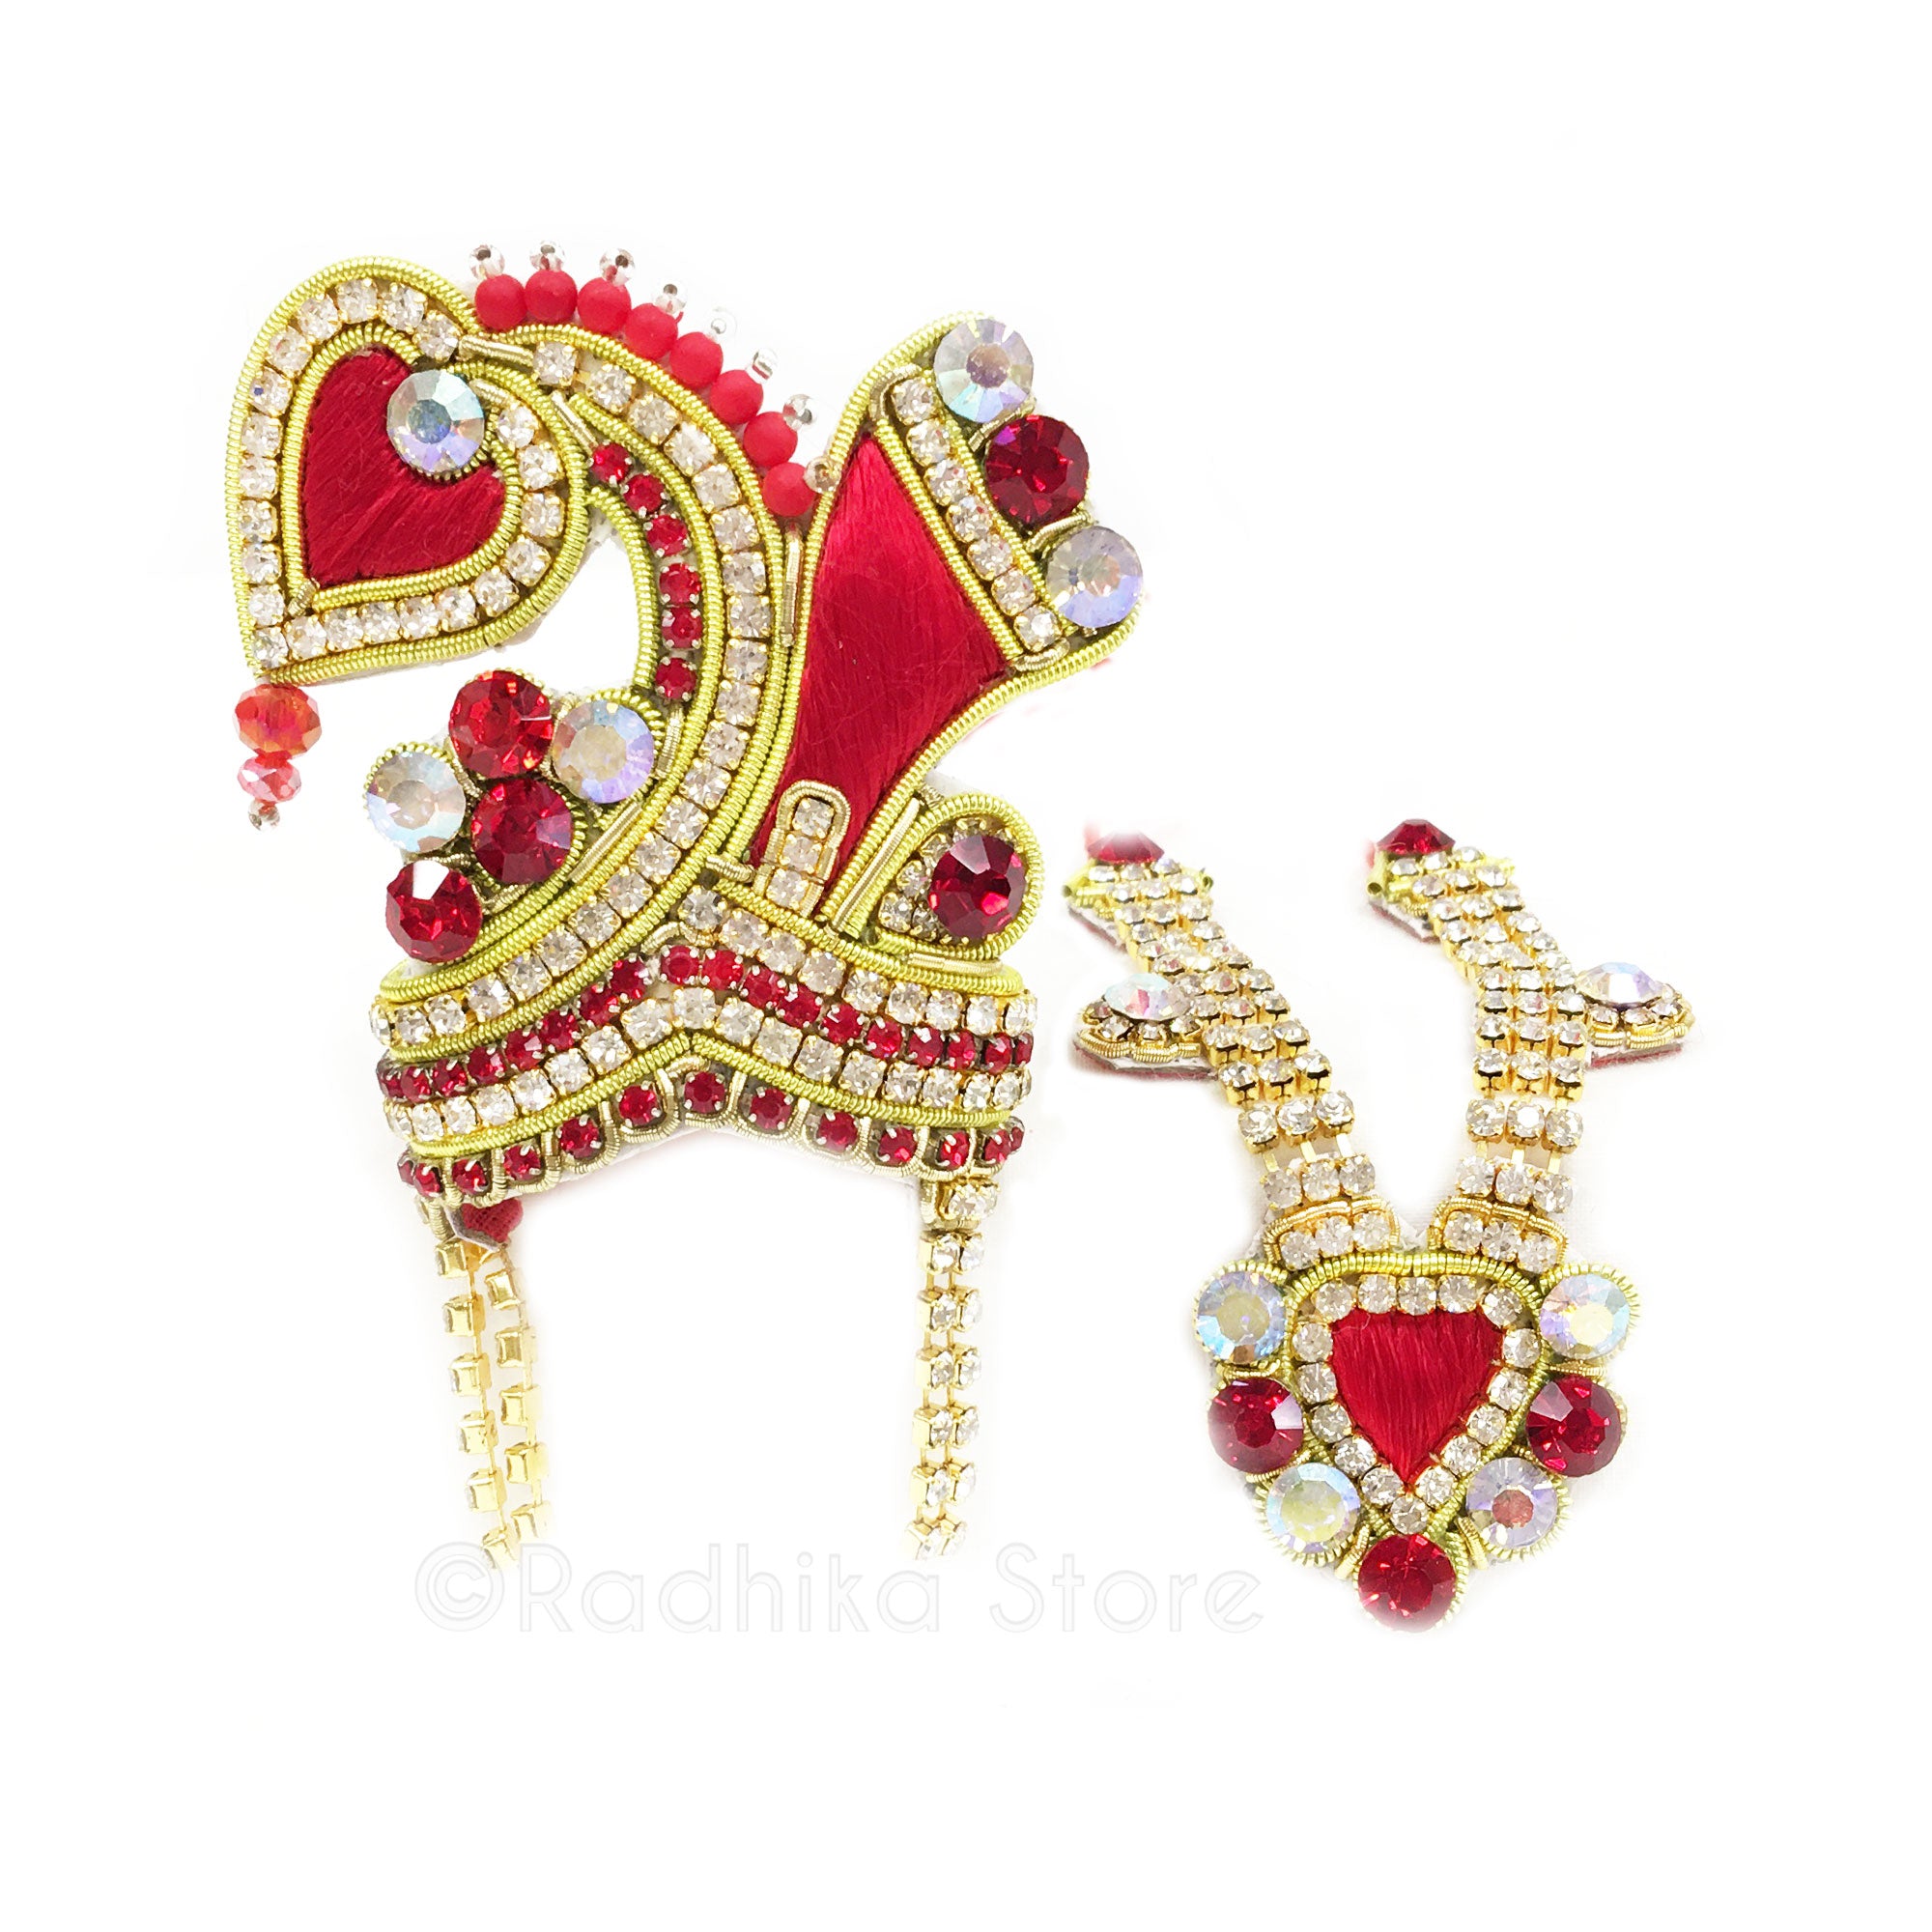 Sri Radha Heart of Vrindavan - Deity Crown and Necklace Set